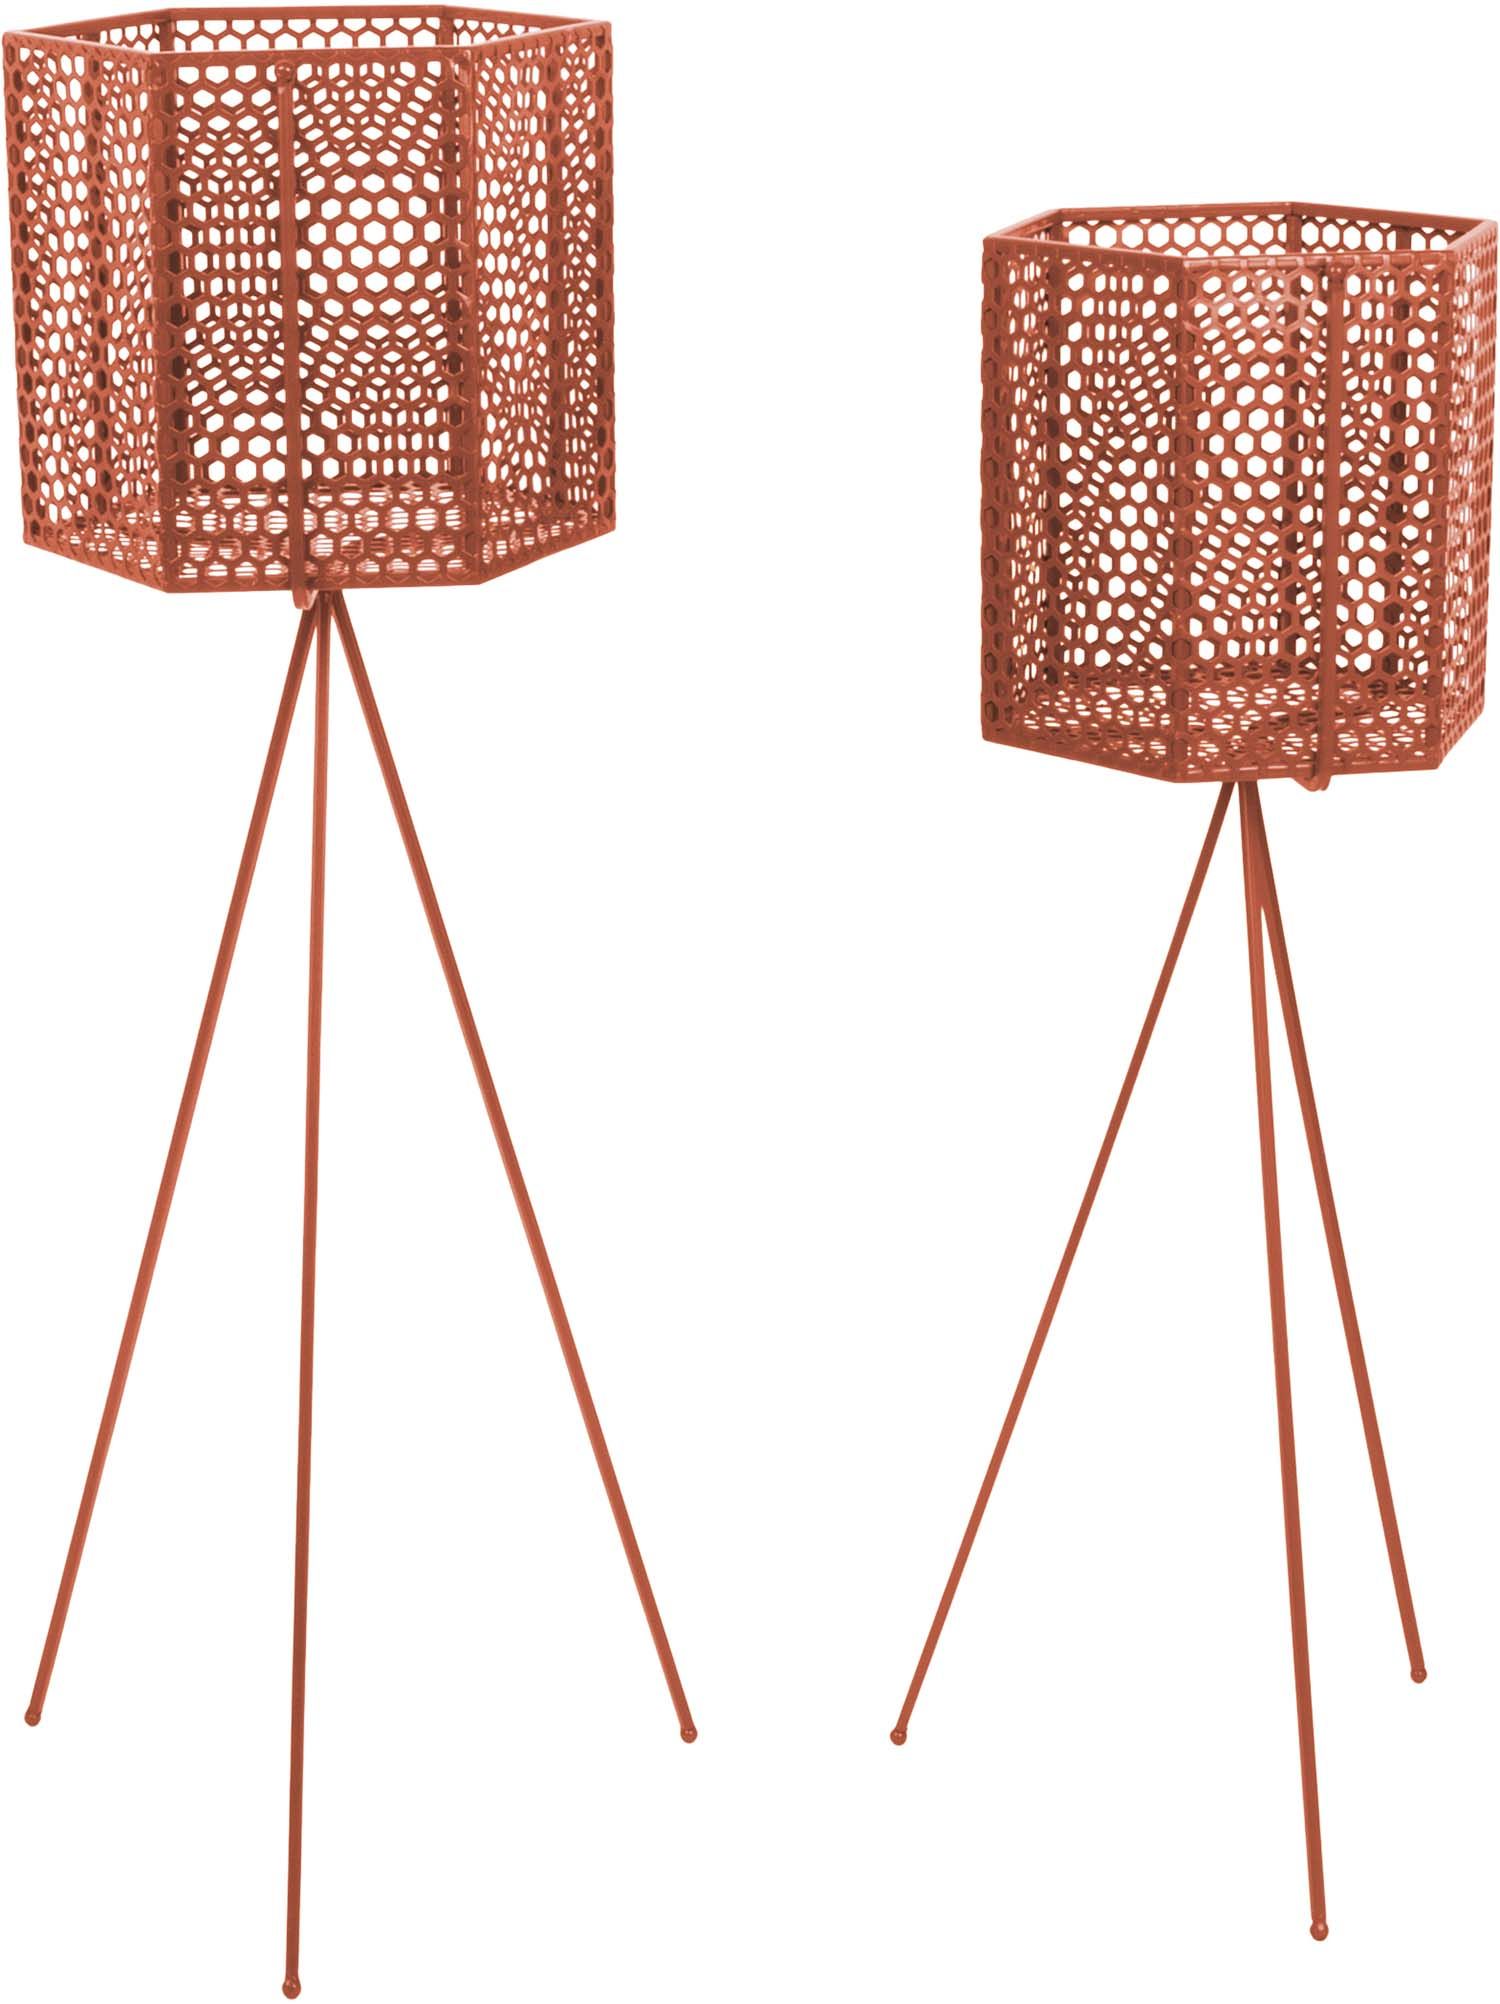 Support à pots de fleurs hexagonales mesh (lot de 2) marron